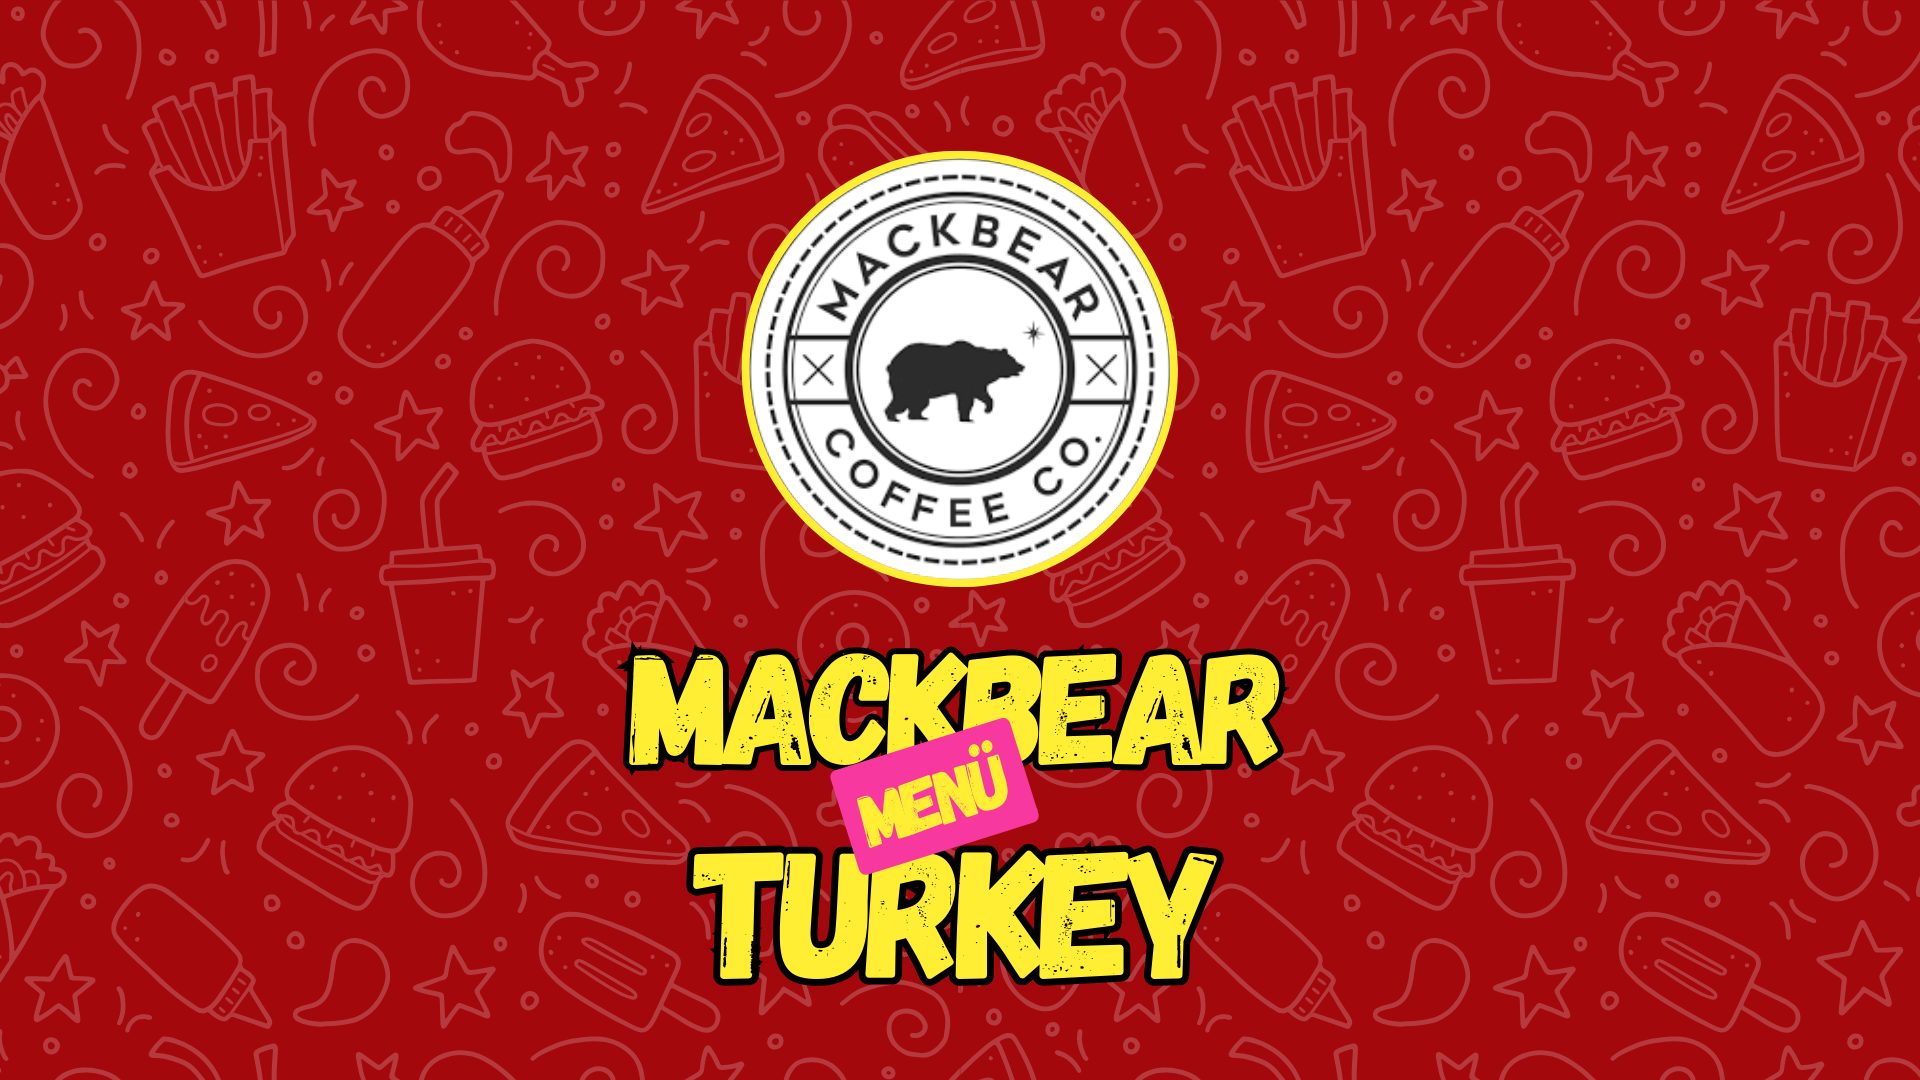 Mackbear